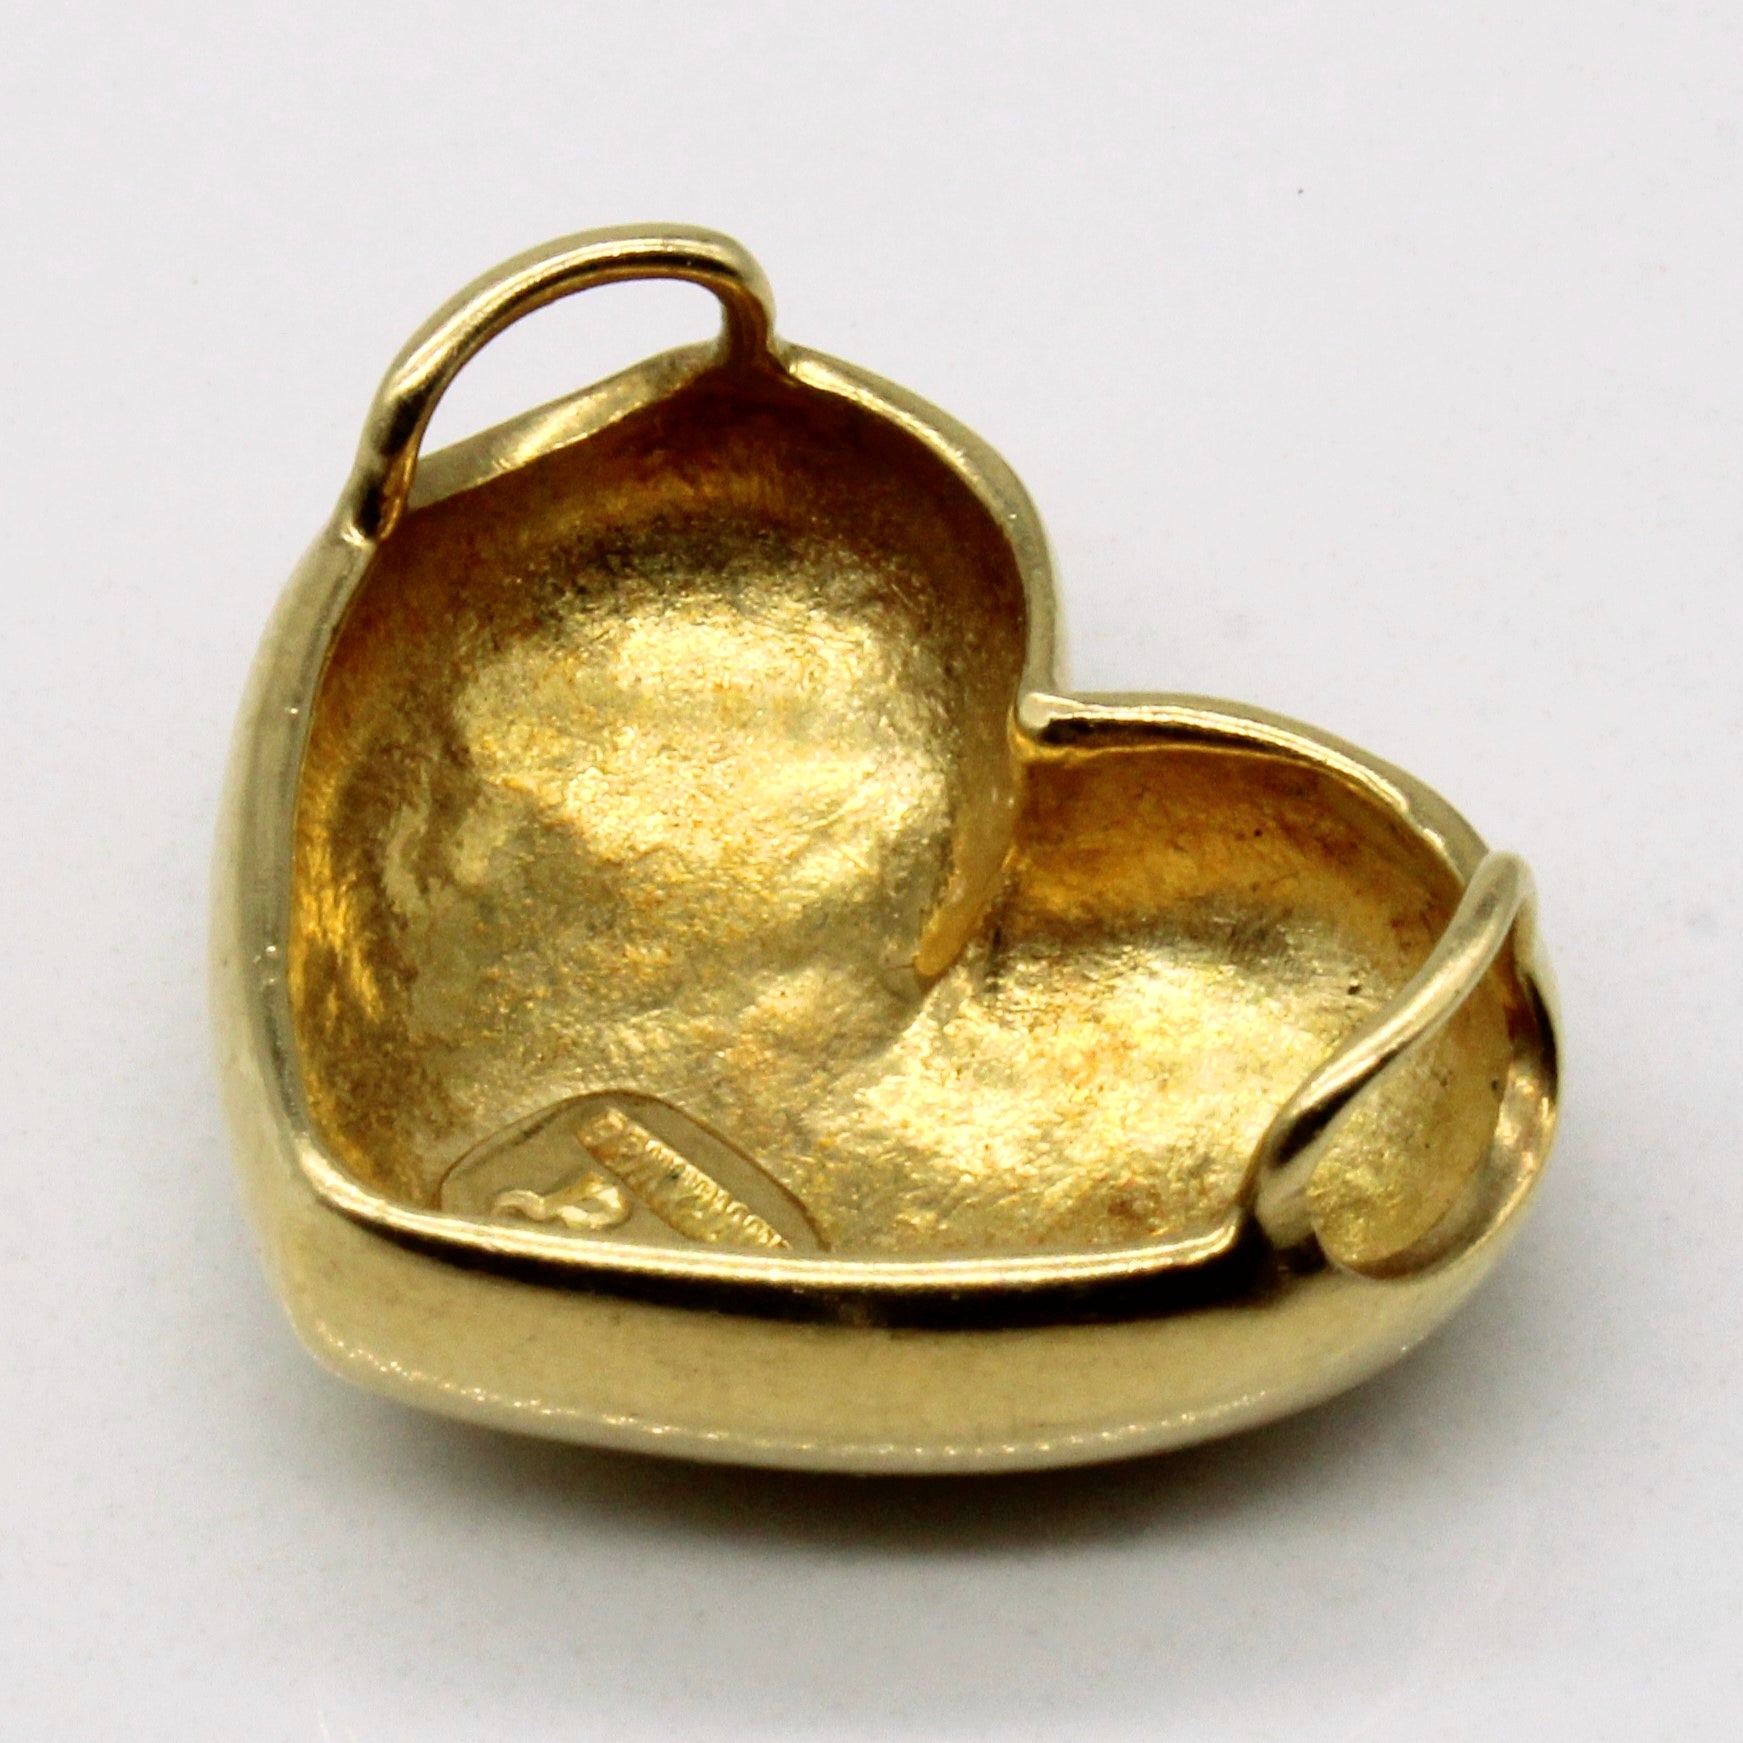 18k Yellow Gold Heart Pendant